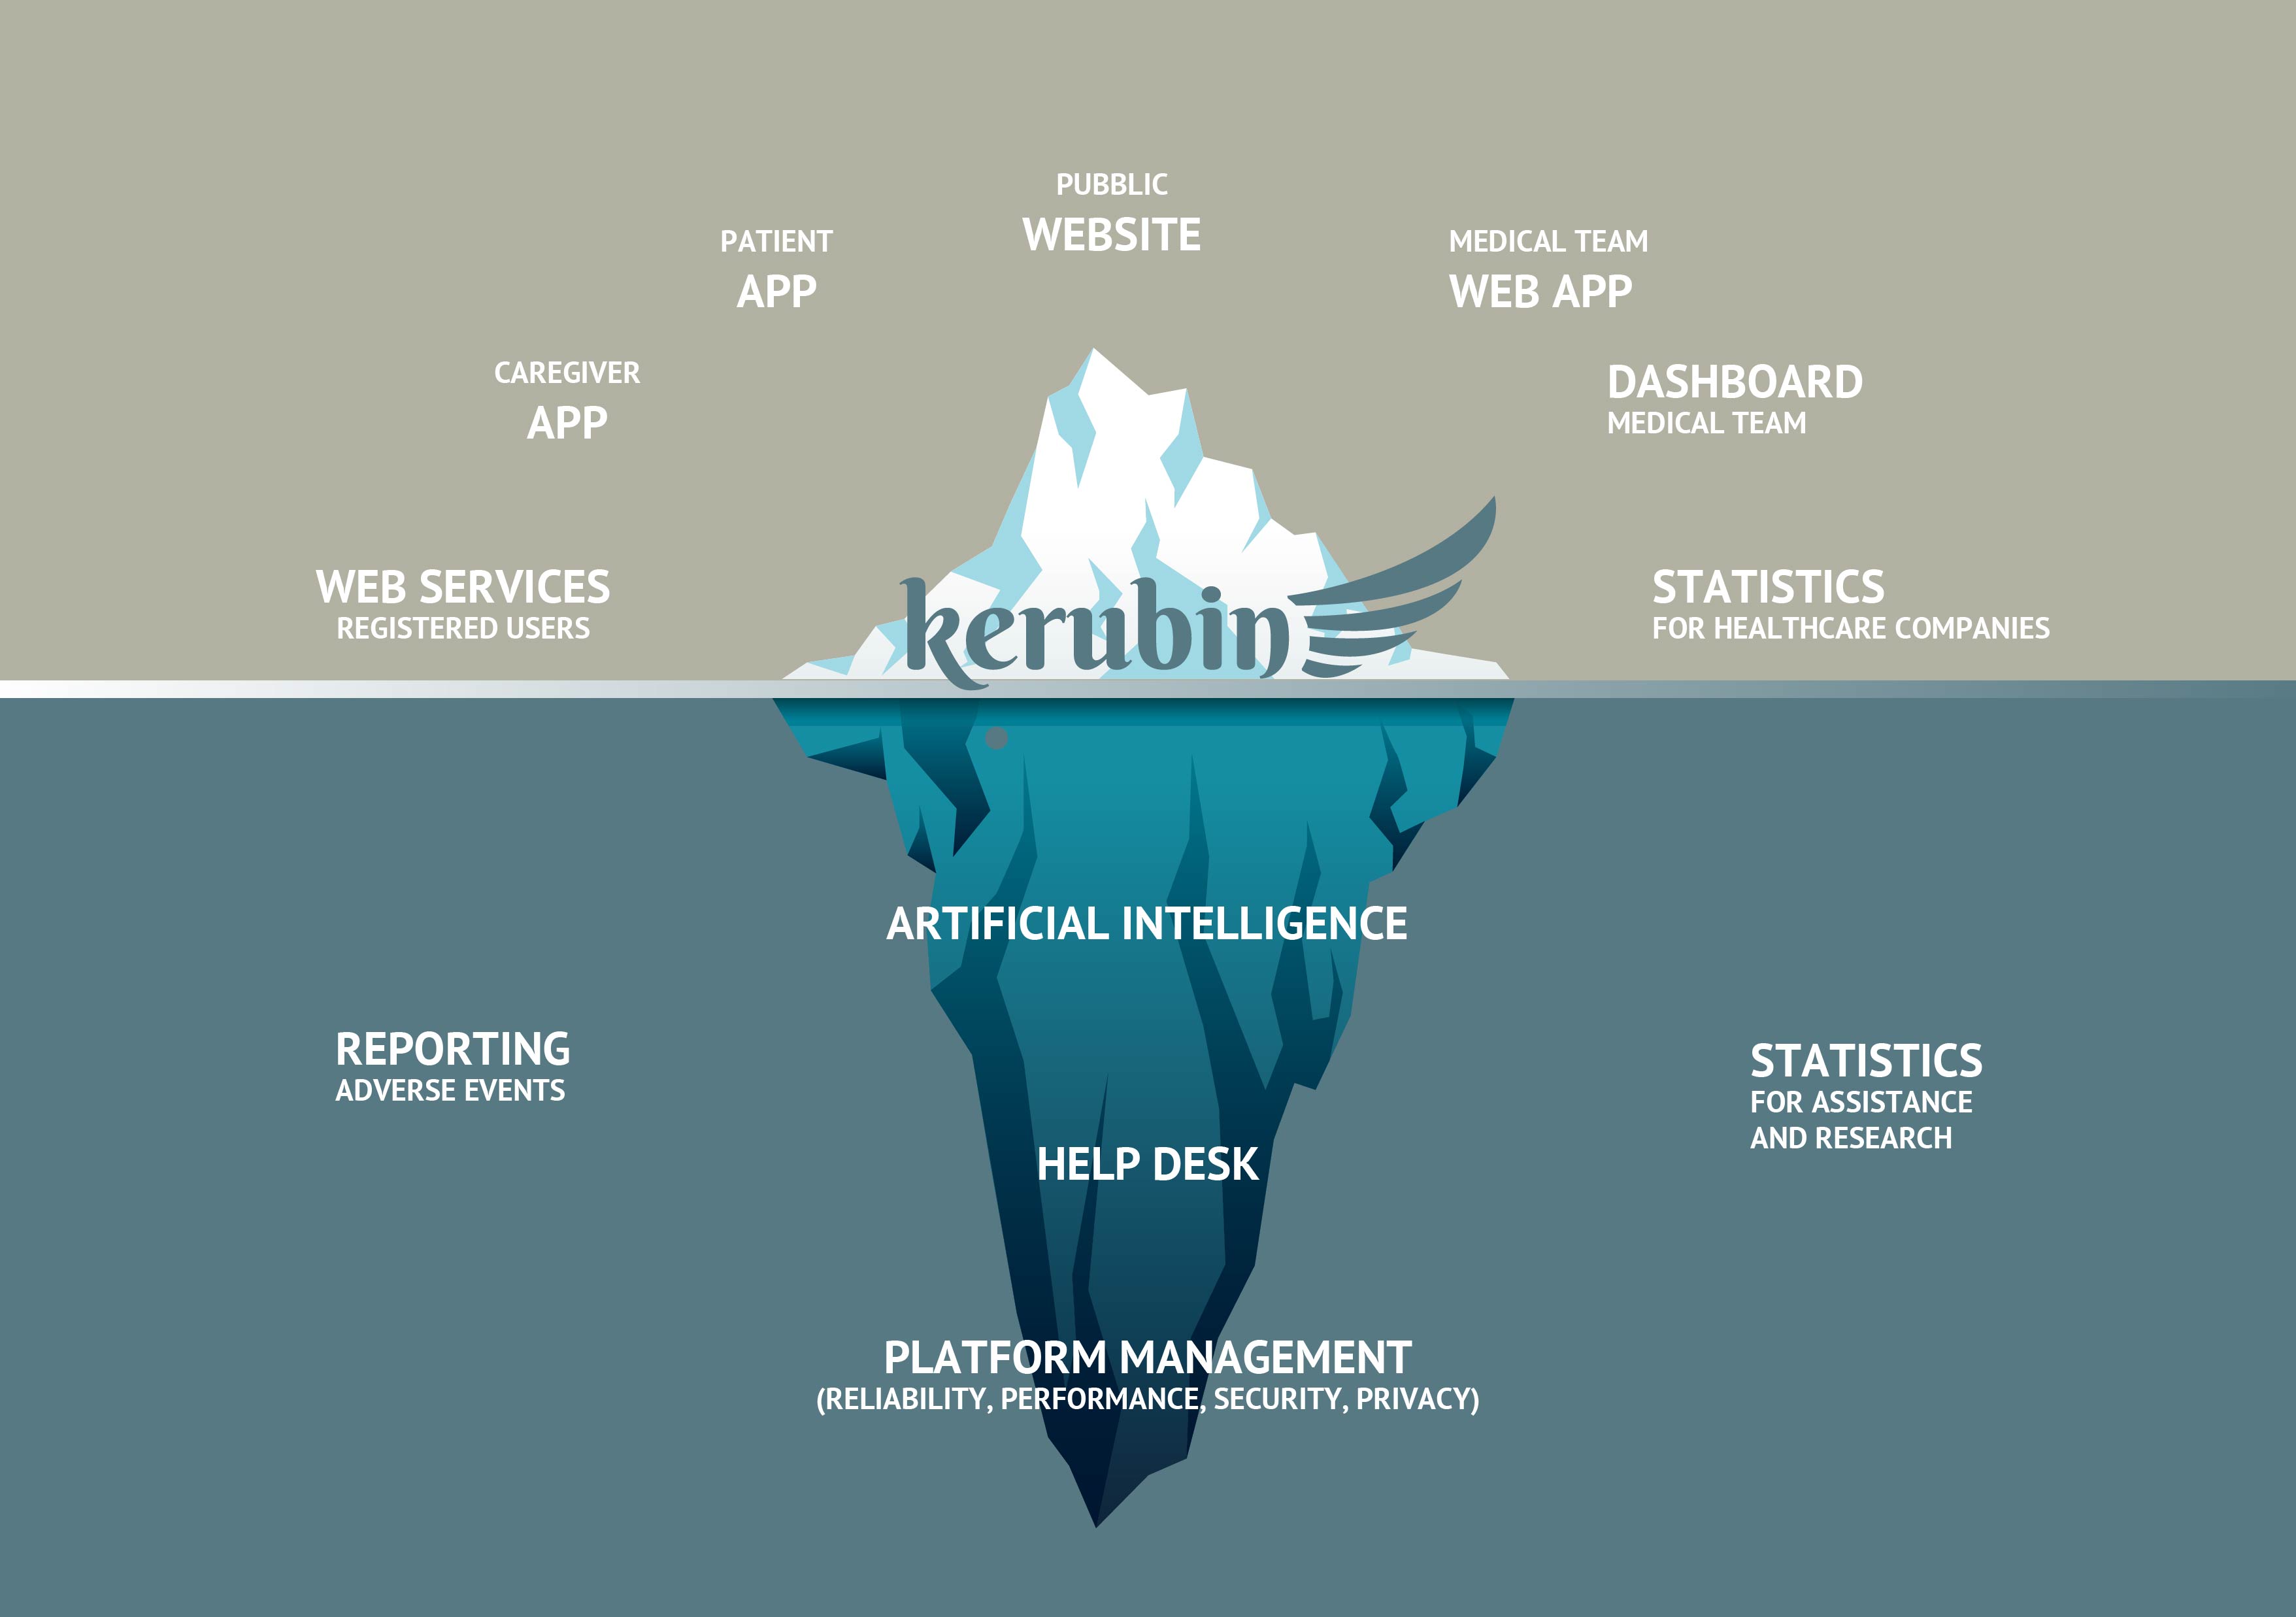 Iceberg scheme